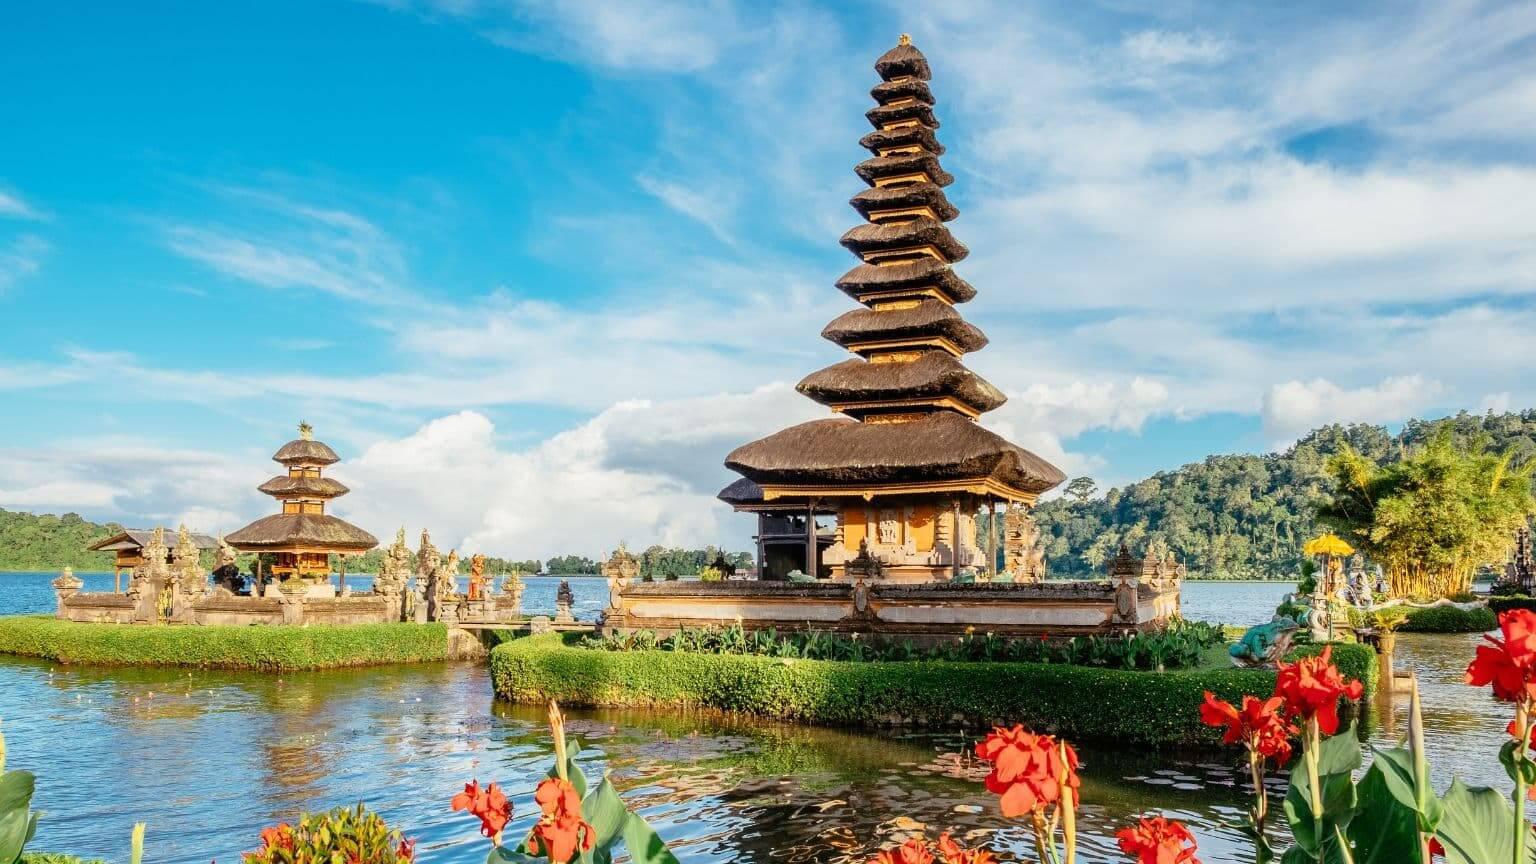 Tour du lịch Indonesia - Bali - Đền Tanah | KH: HCM